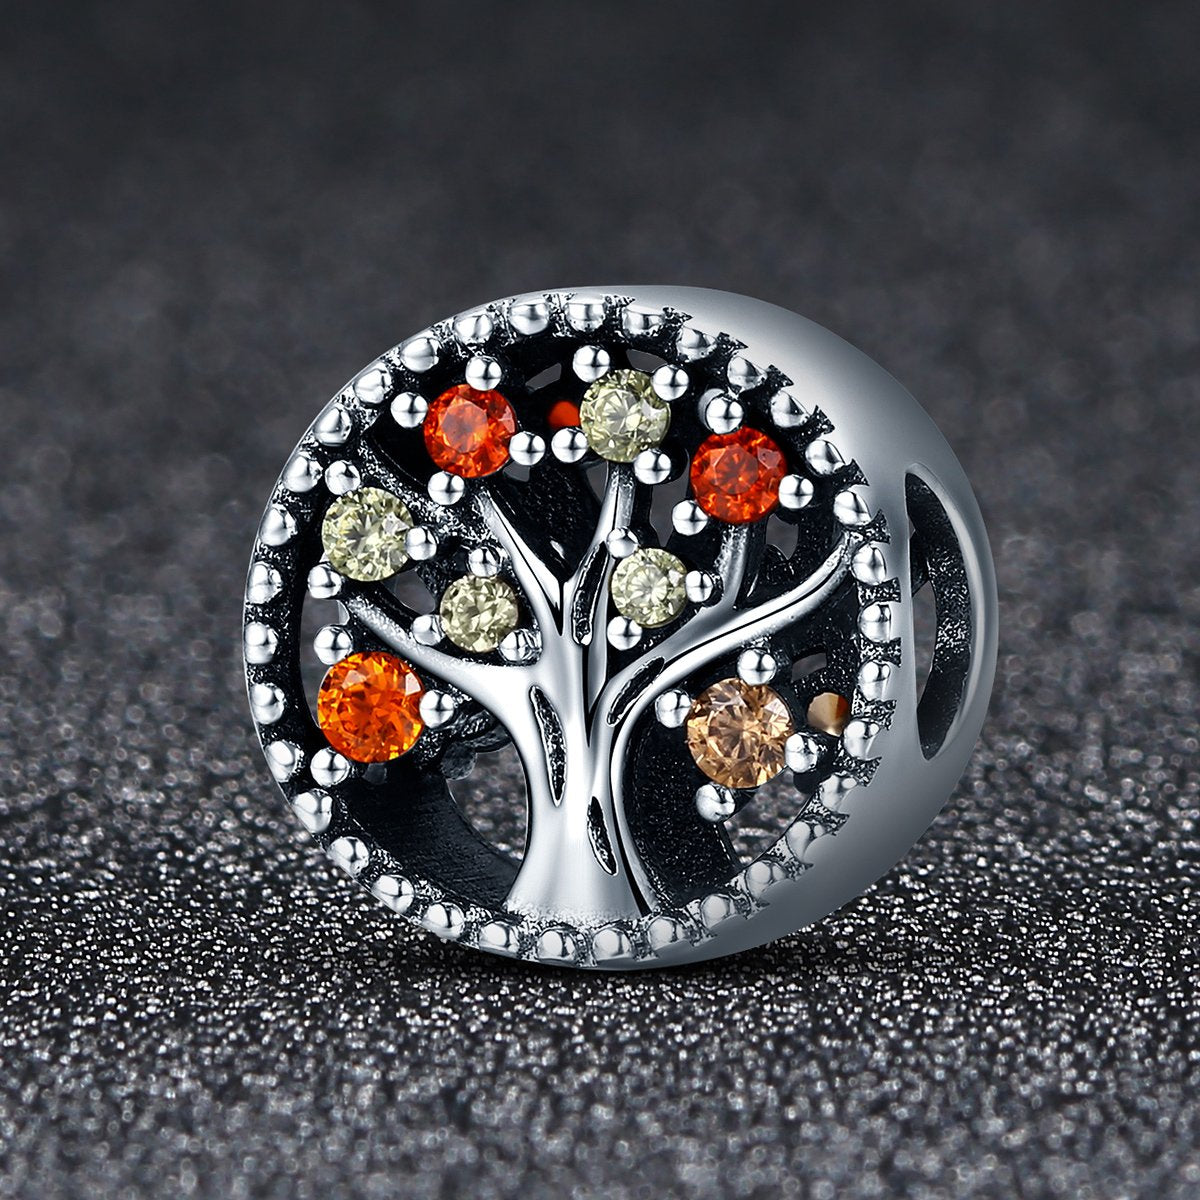 Sterling 925 silver charm the vivid life tree bead pendant fits Pandora charm and European charm bracelet Xaxe.com